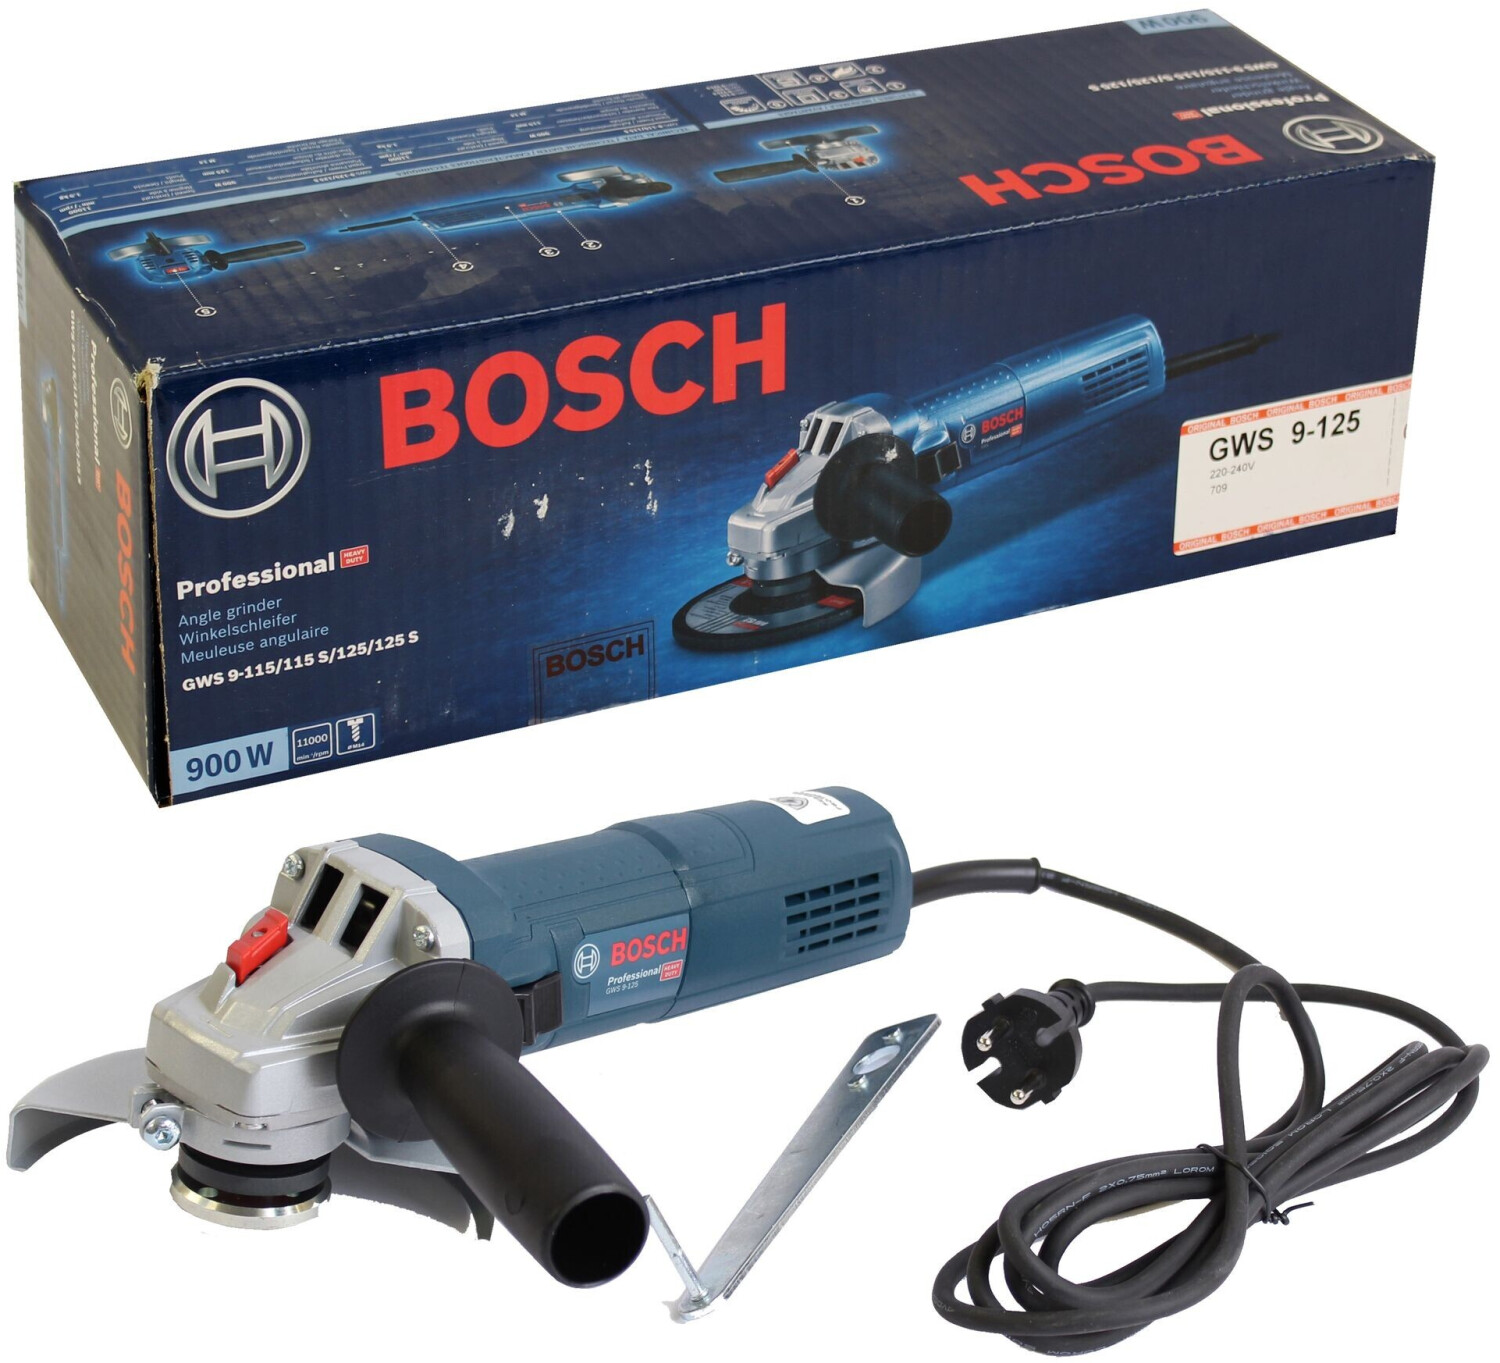 119,99 (0 GWS ab 000) Professional Preisvergleich € Bosch 601 bei 791 | 9-125